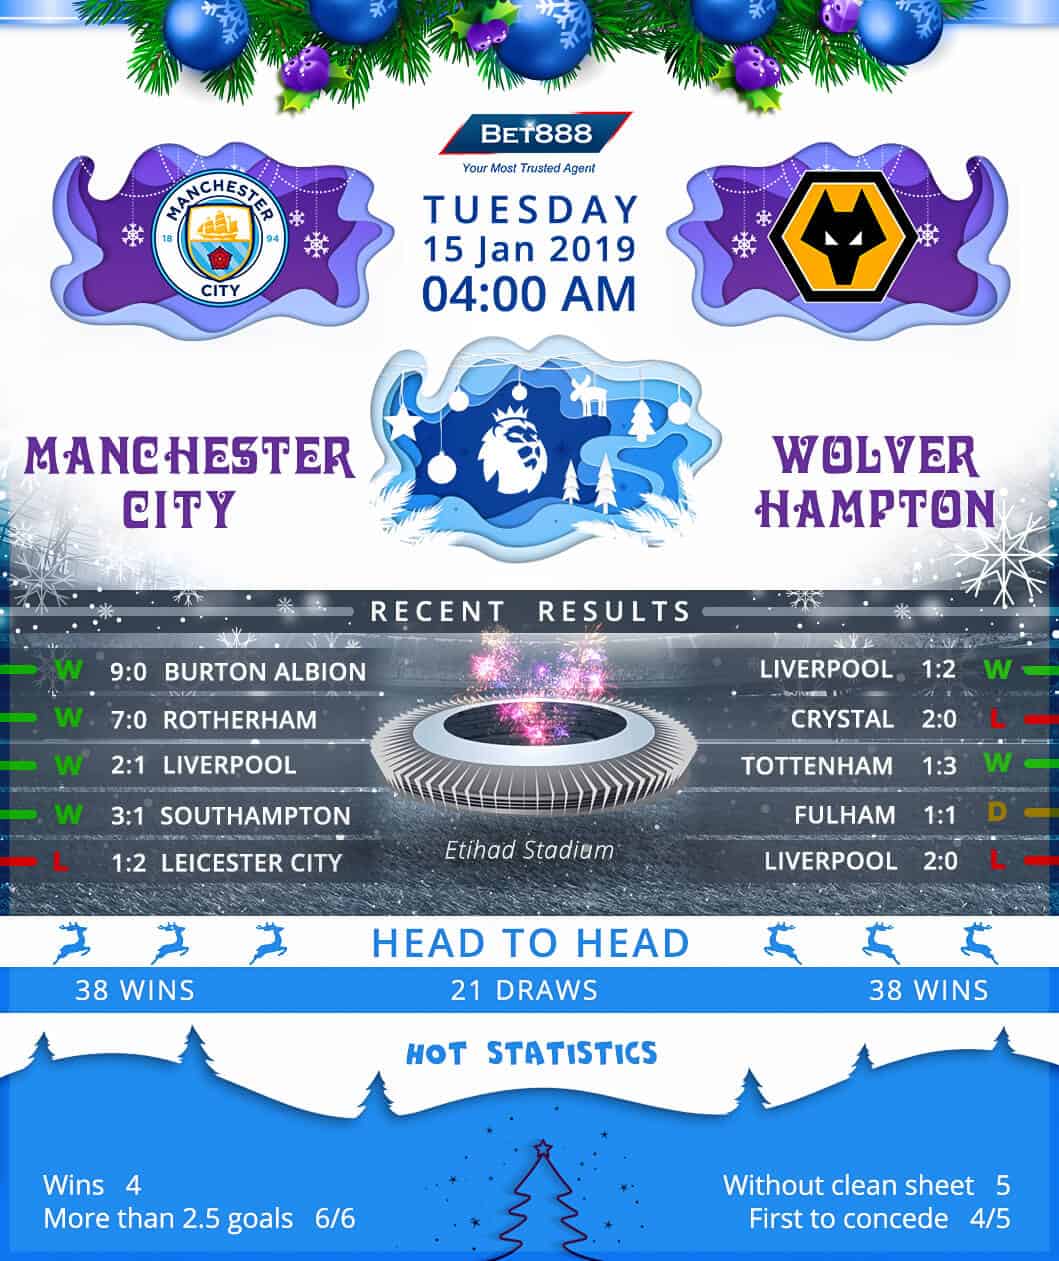 Manchester City vs Wolverhampton Wanderers 15/01/19